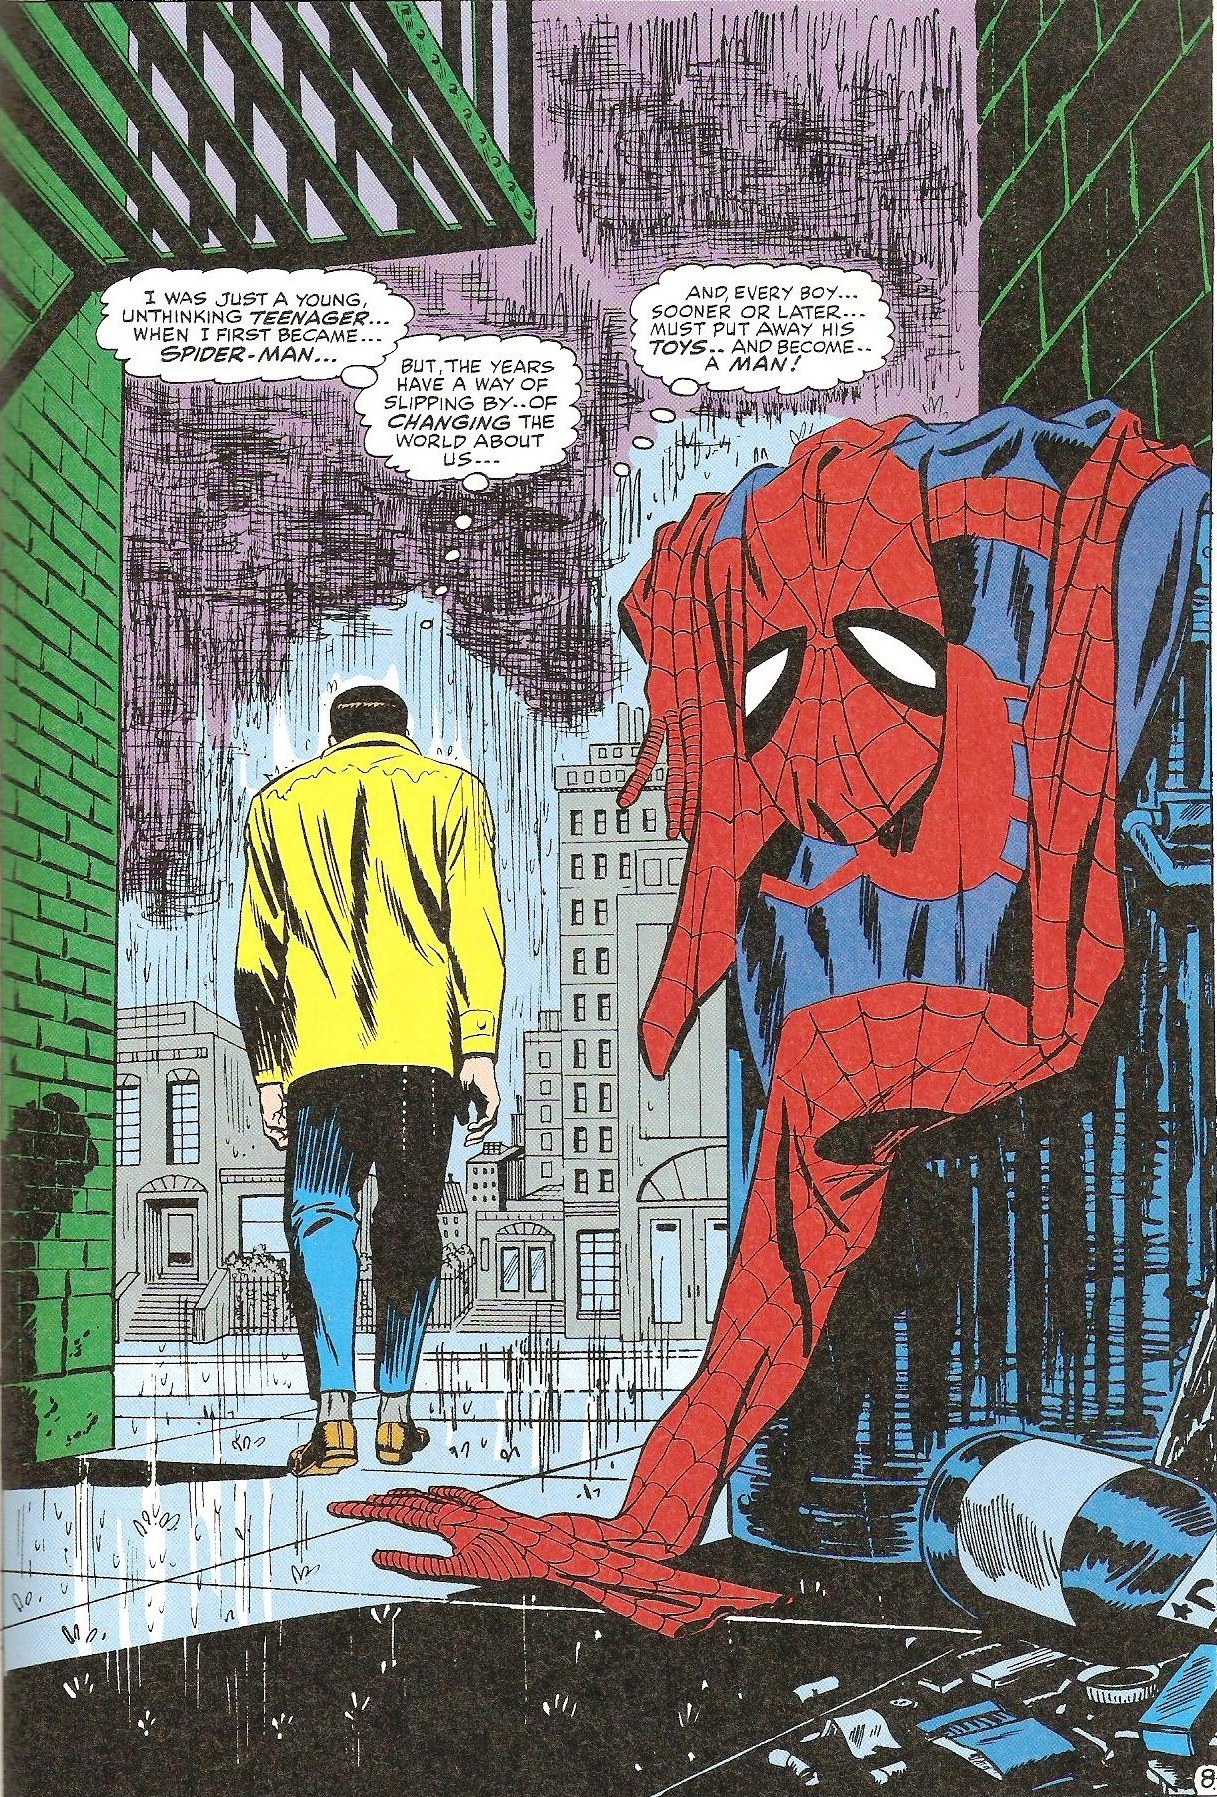 https://ifanboy.com/wp-content/uploads/2012/07/The-Amazing-Spider-Man-Vol.-1-50-1967.jpg